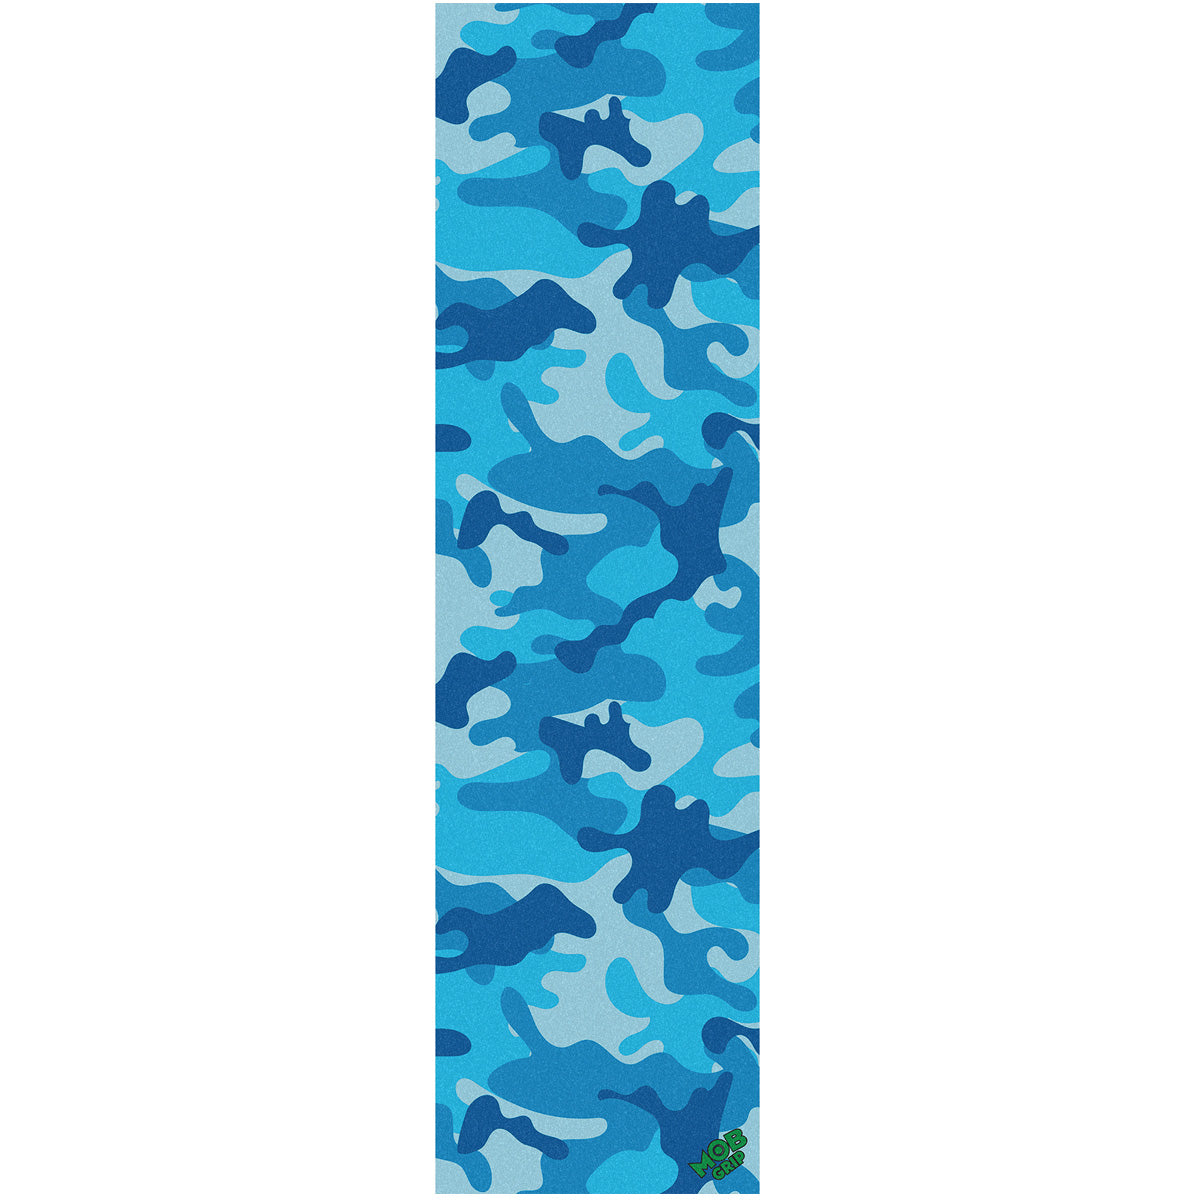 Mob Camo II Grip Tape - Water Blue image 1